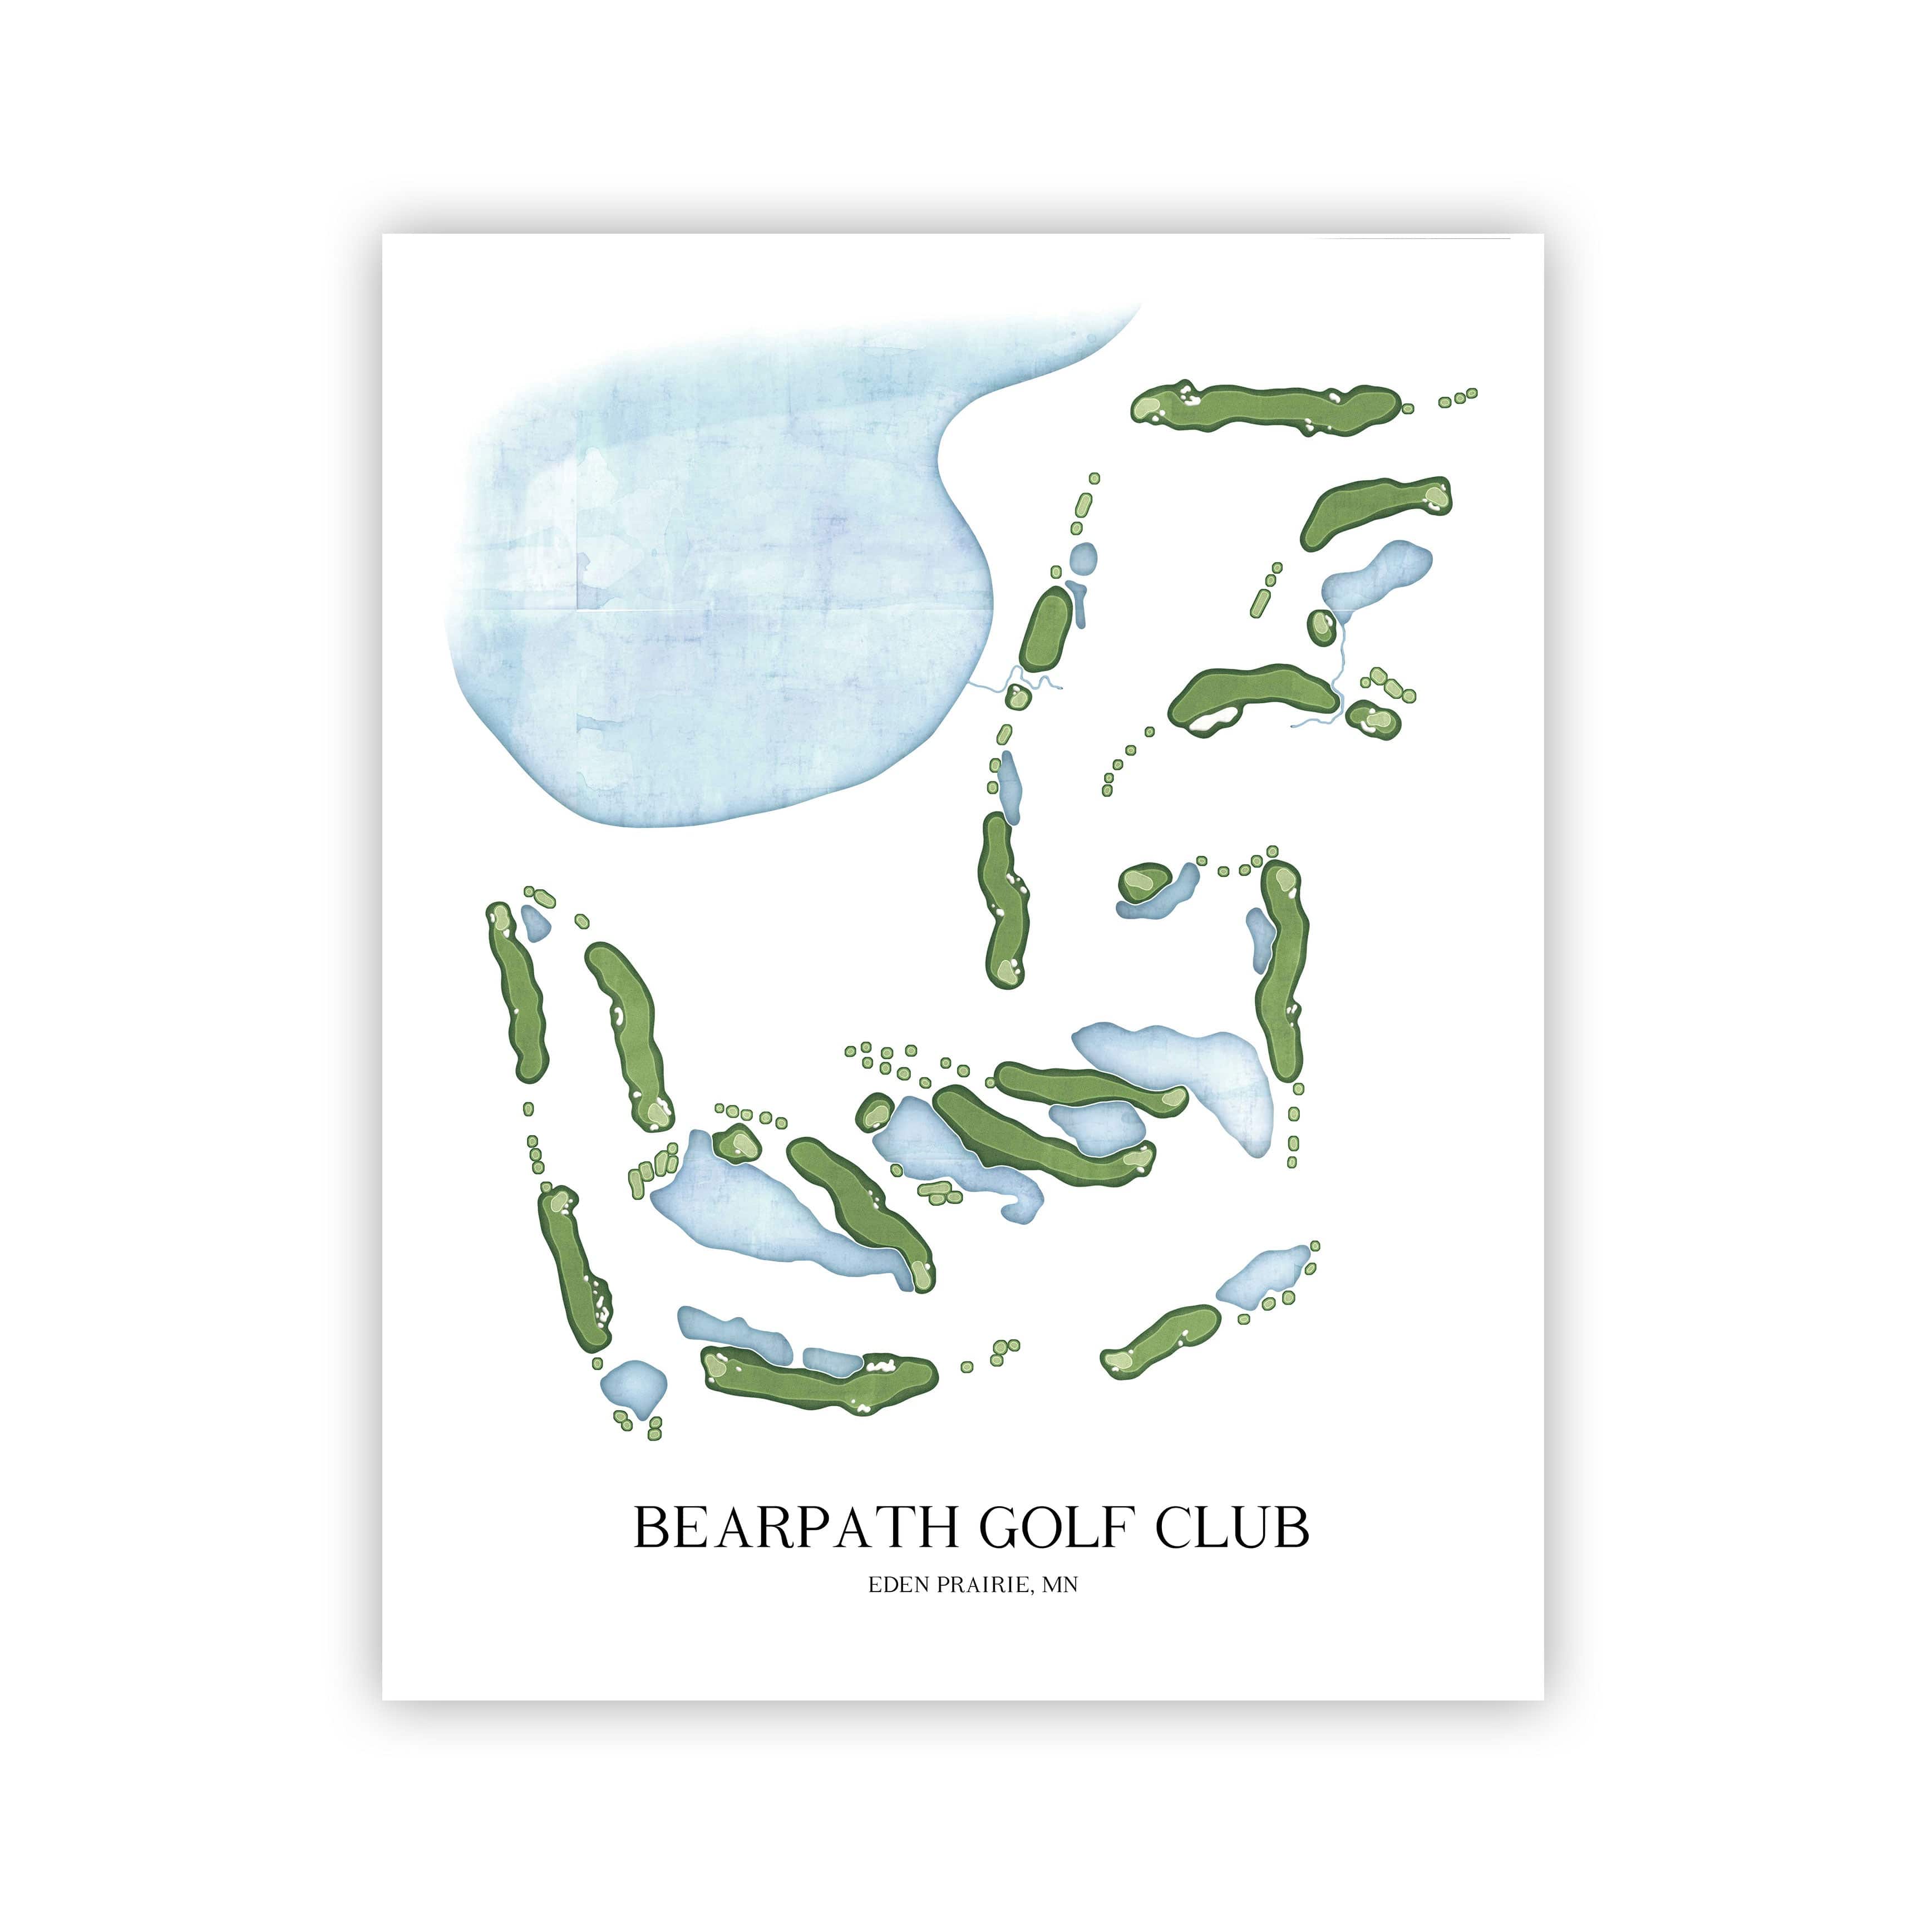 The 19th Hole Golf Shop - Golf Course Prints -  Bearpath Golf Club Golf Course Map